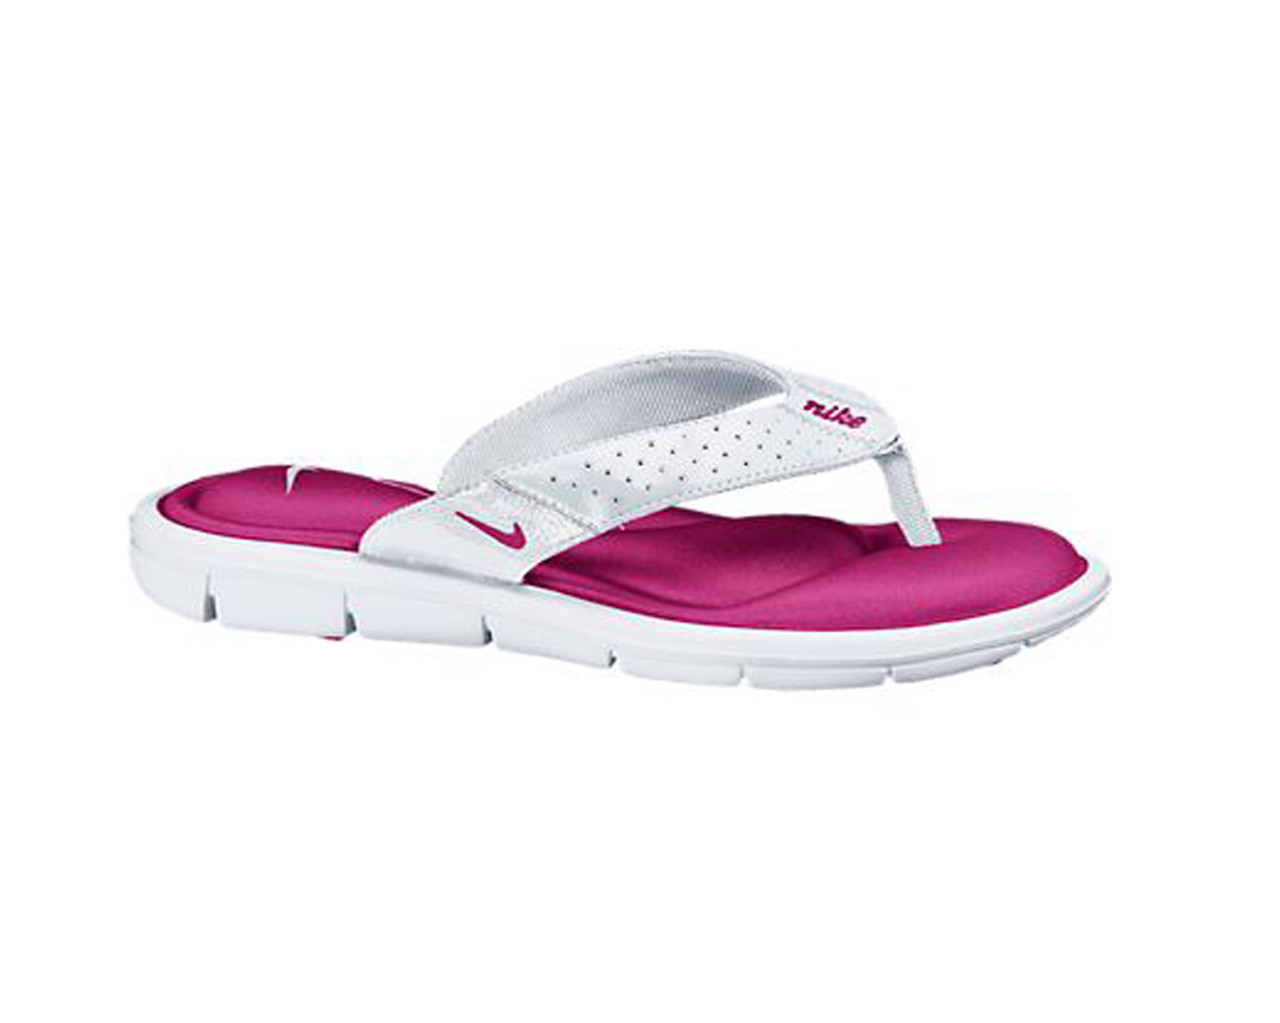 Nike Women's Comfort Thong Sandal - | Discount Nike Ladies Sandals & More - Shoolu.com |